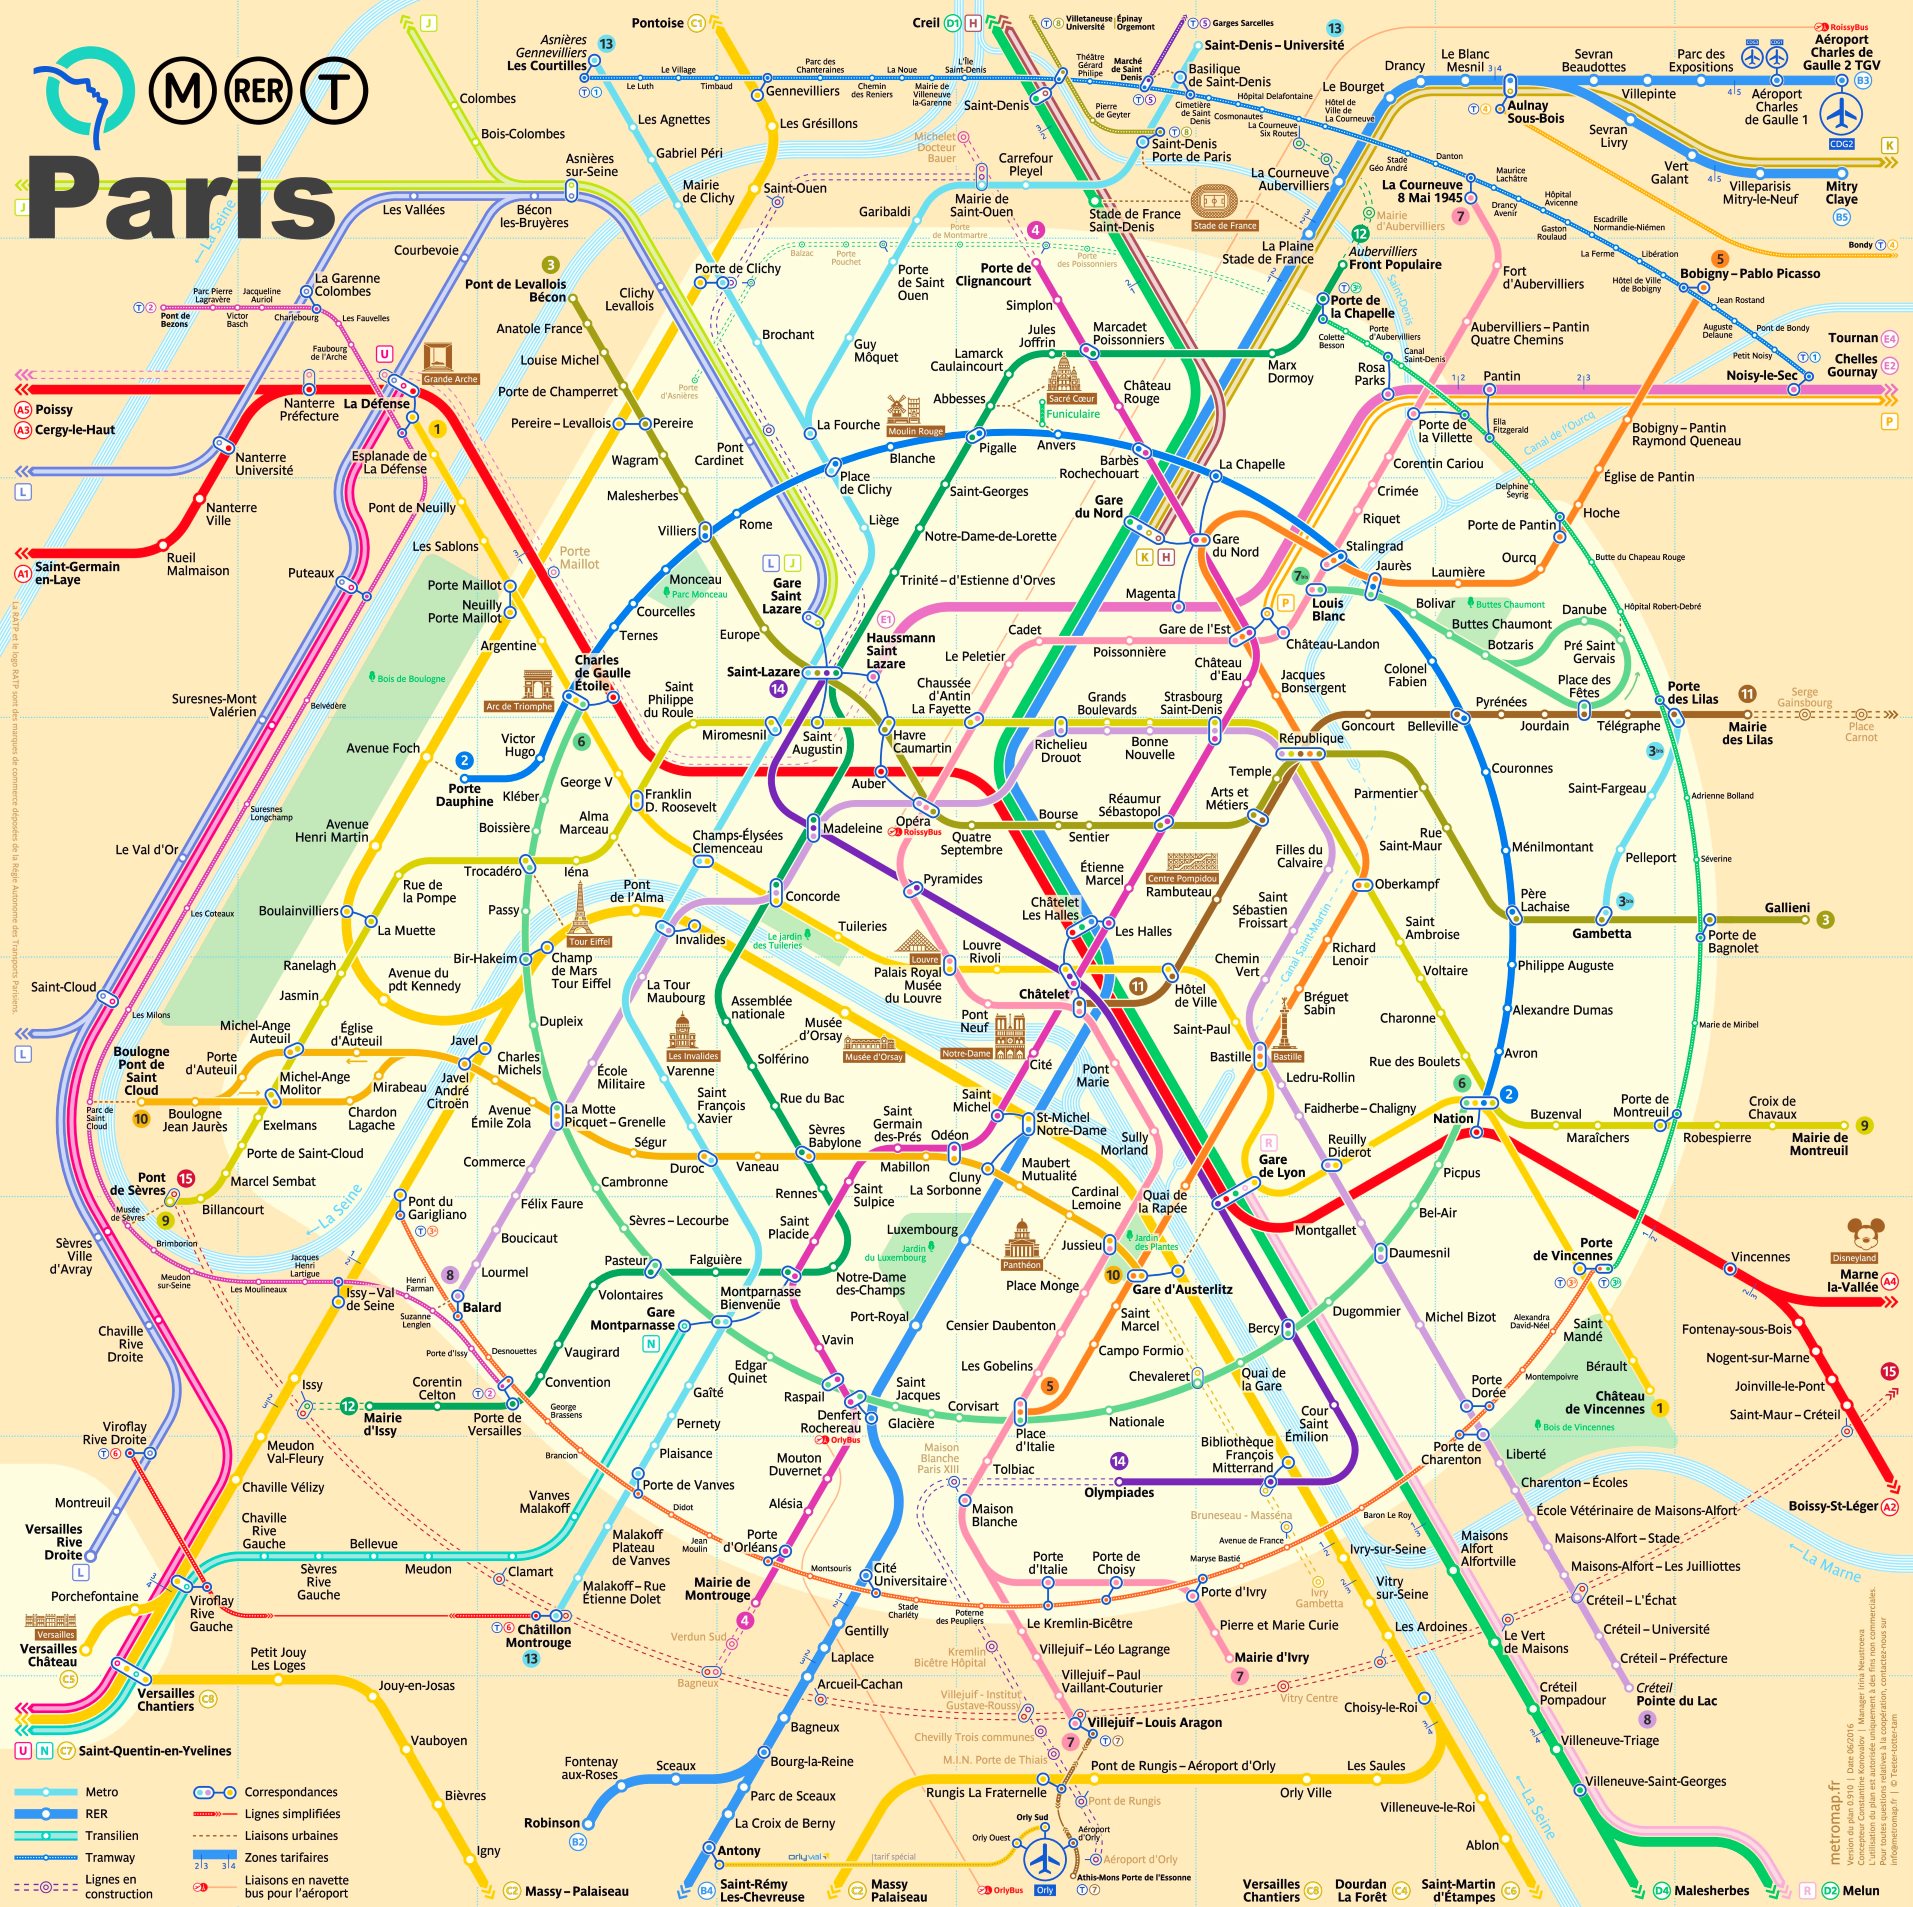 Paris Metro, RER and Tram Map.